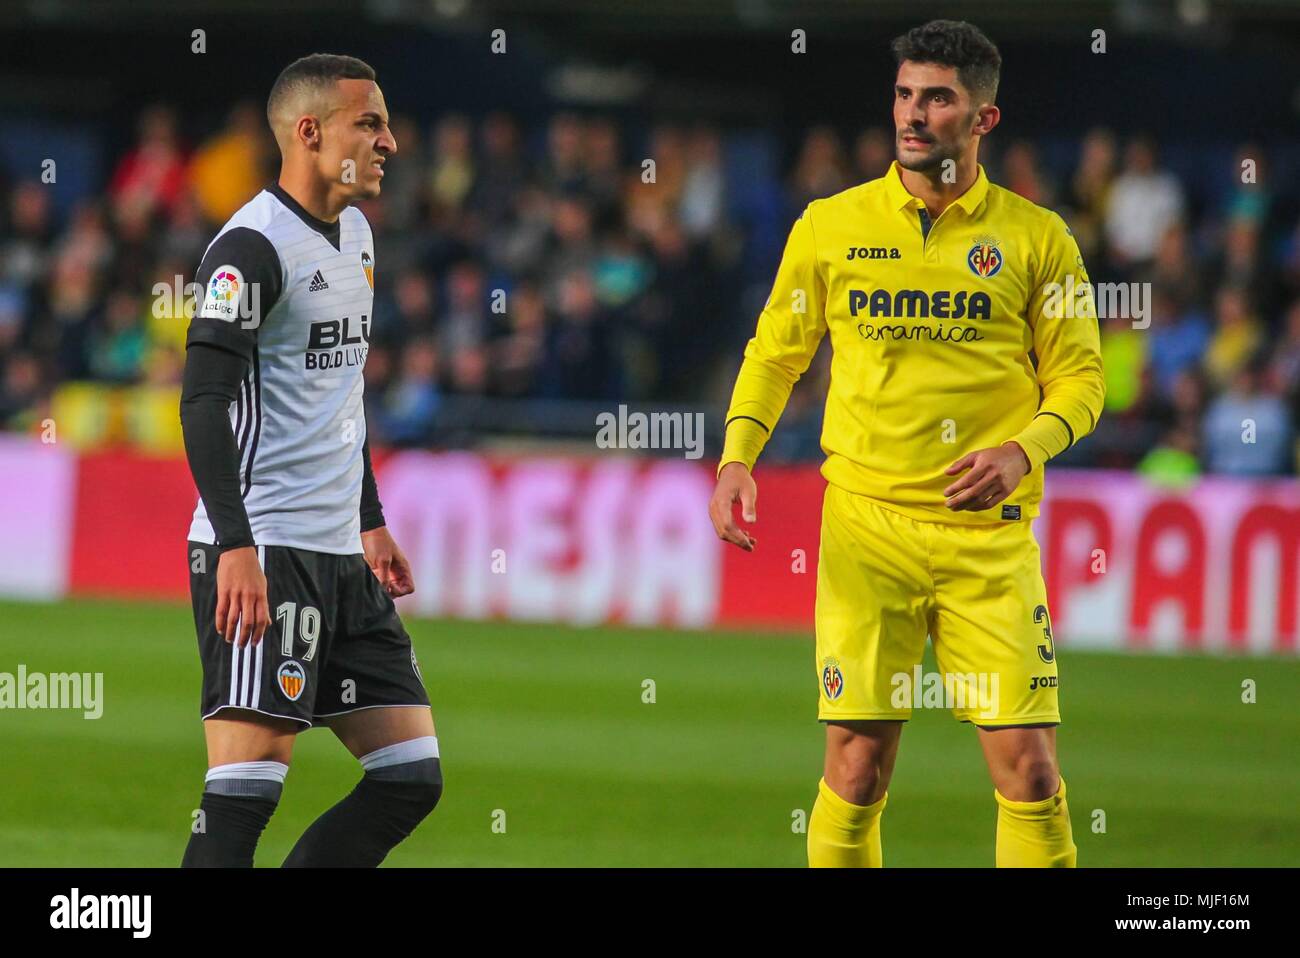 Rodrigo Moreno and Alvaro Gonzalez during the match between Villarreal CF and Valencia CF at the Estadio de la Ceramica.  Cordon Press Stock Photo